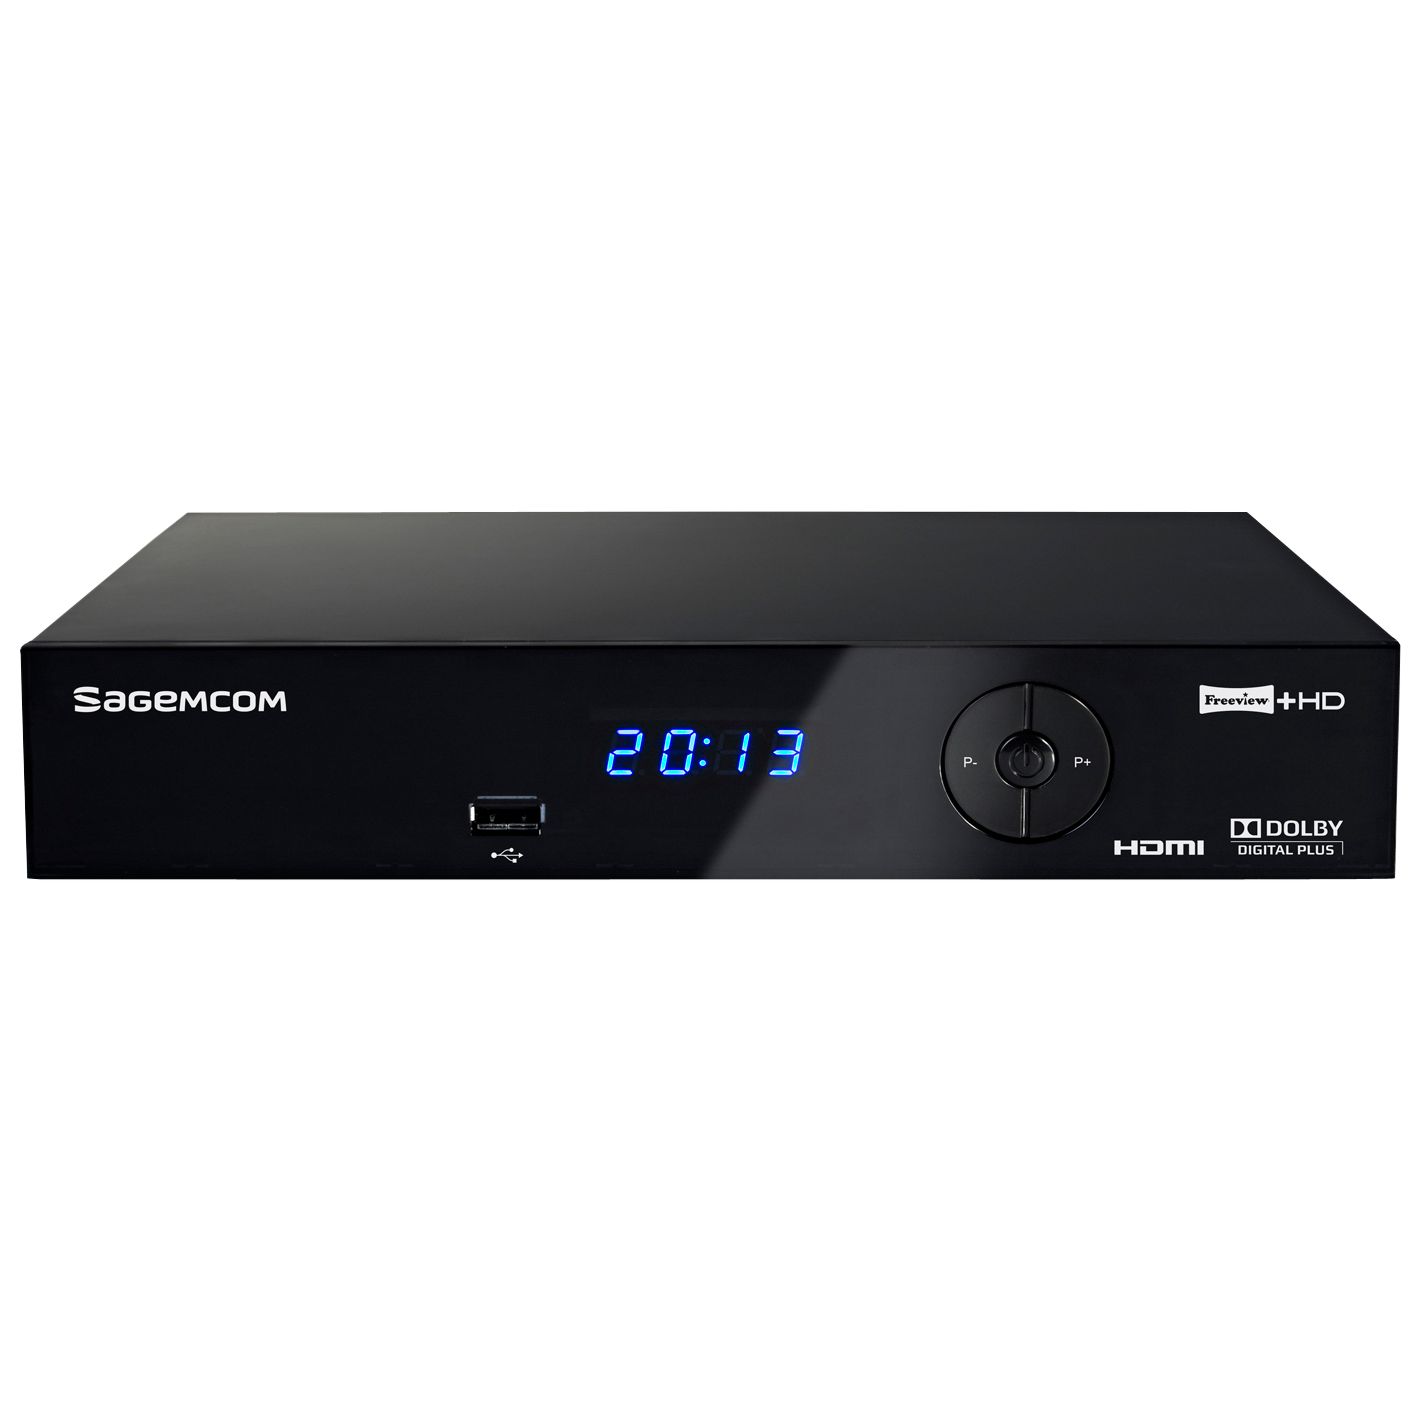 Sagemcom T2 320GB Freeview+ HD Digital TV Recorder at John Lewis